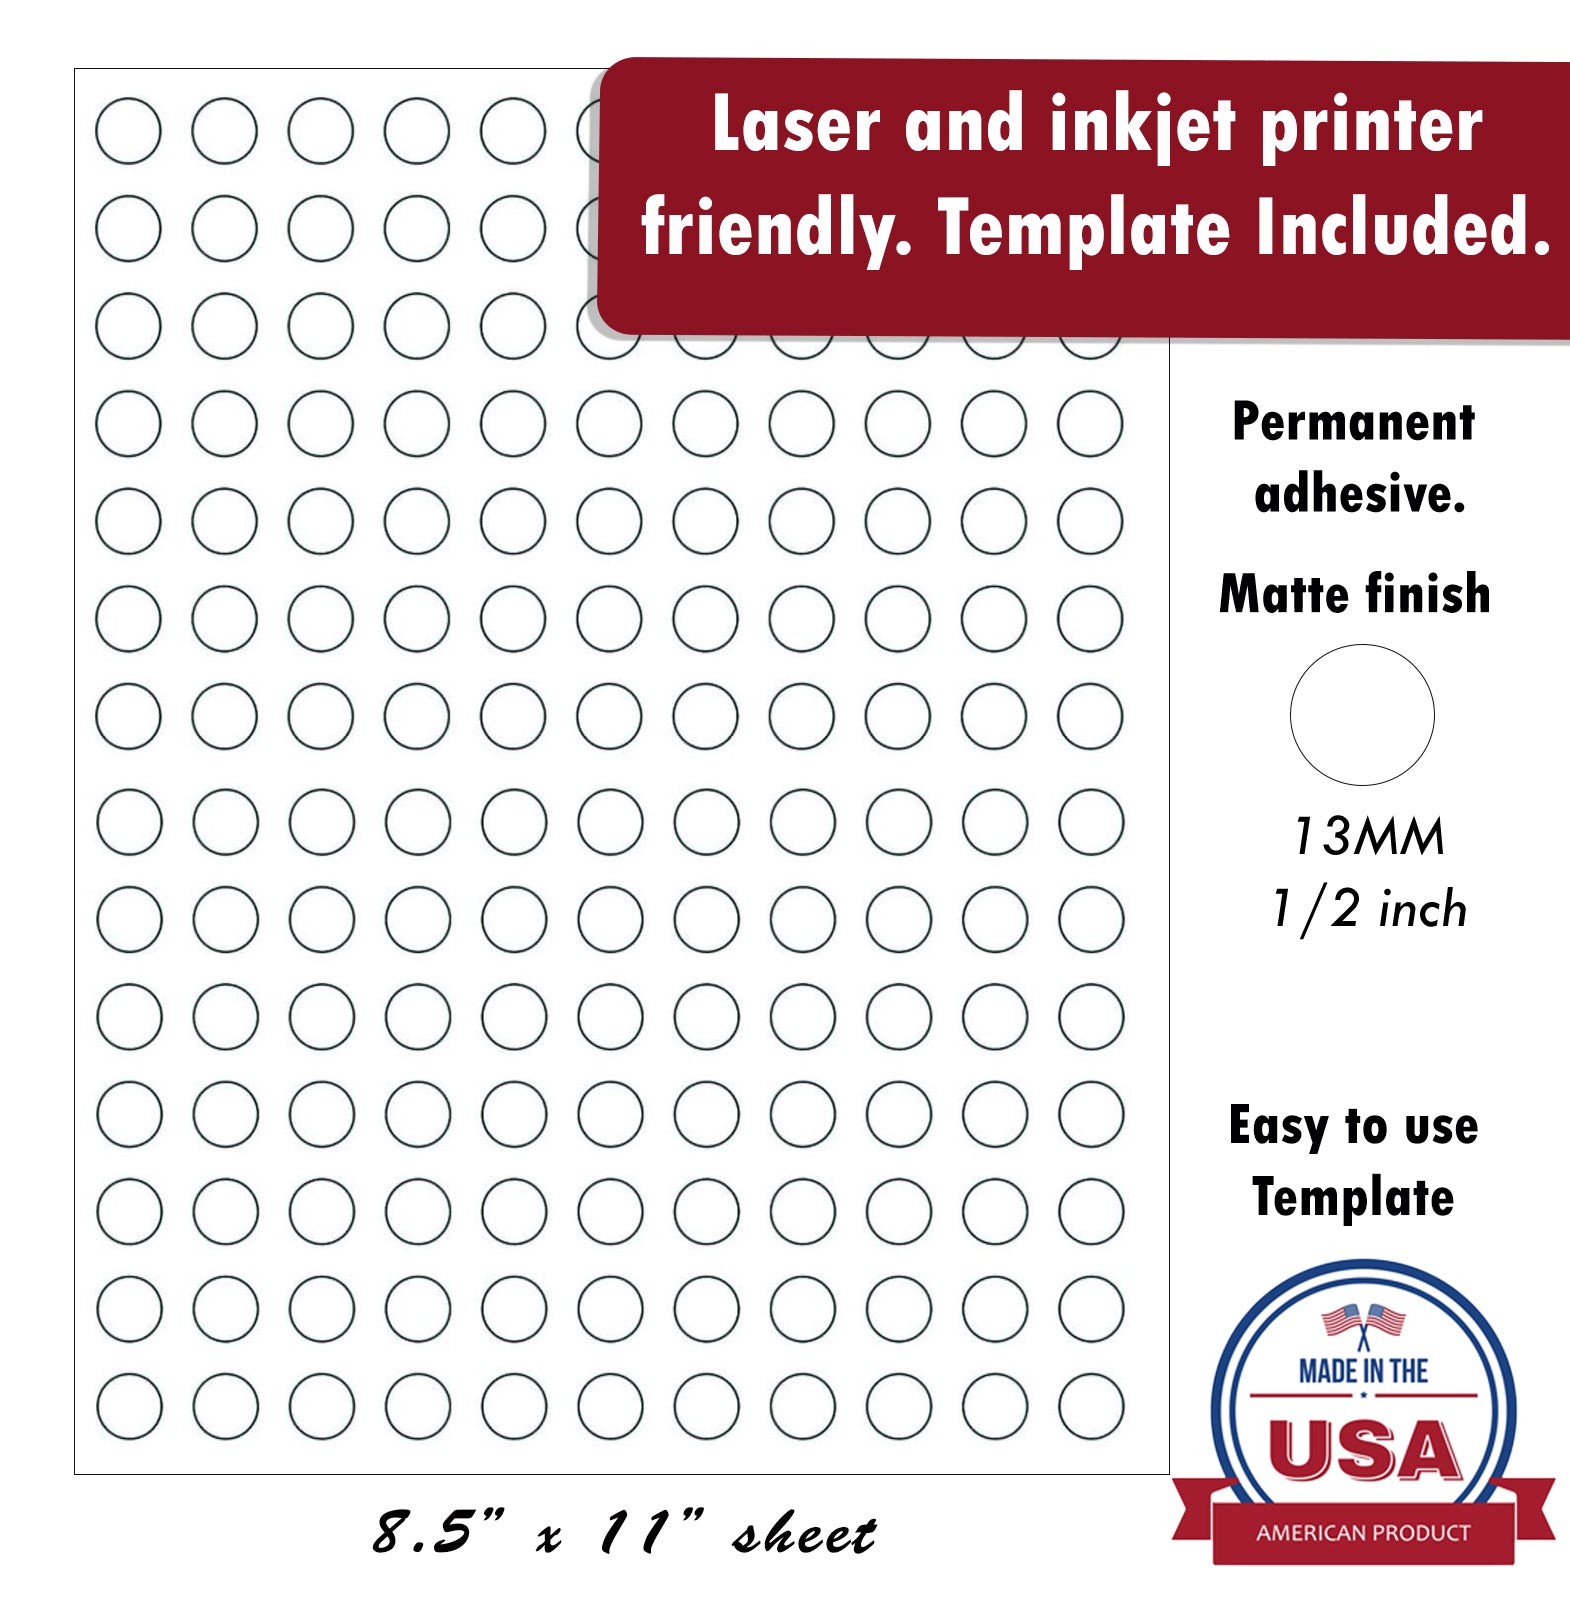 White Rectangular Labels + Bonus Color Labels - Value Pack- White Coding Labels Produce Excellent Results with Standard Laser Printer-Template